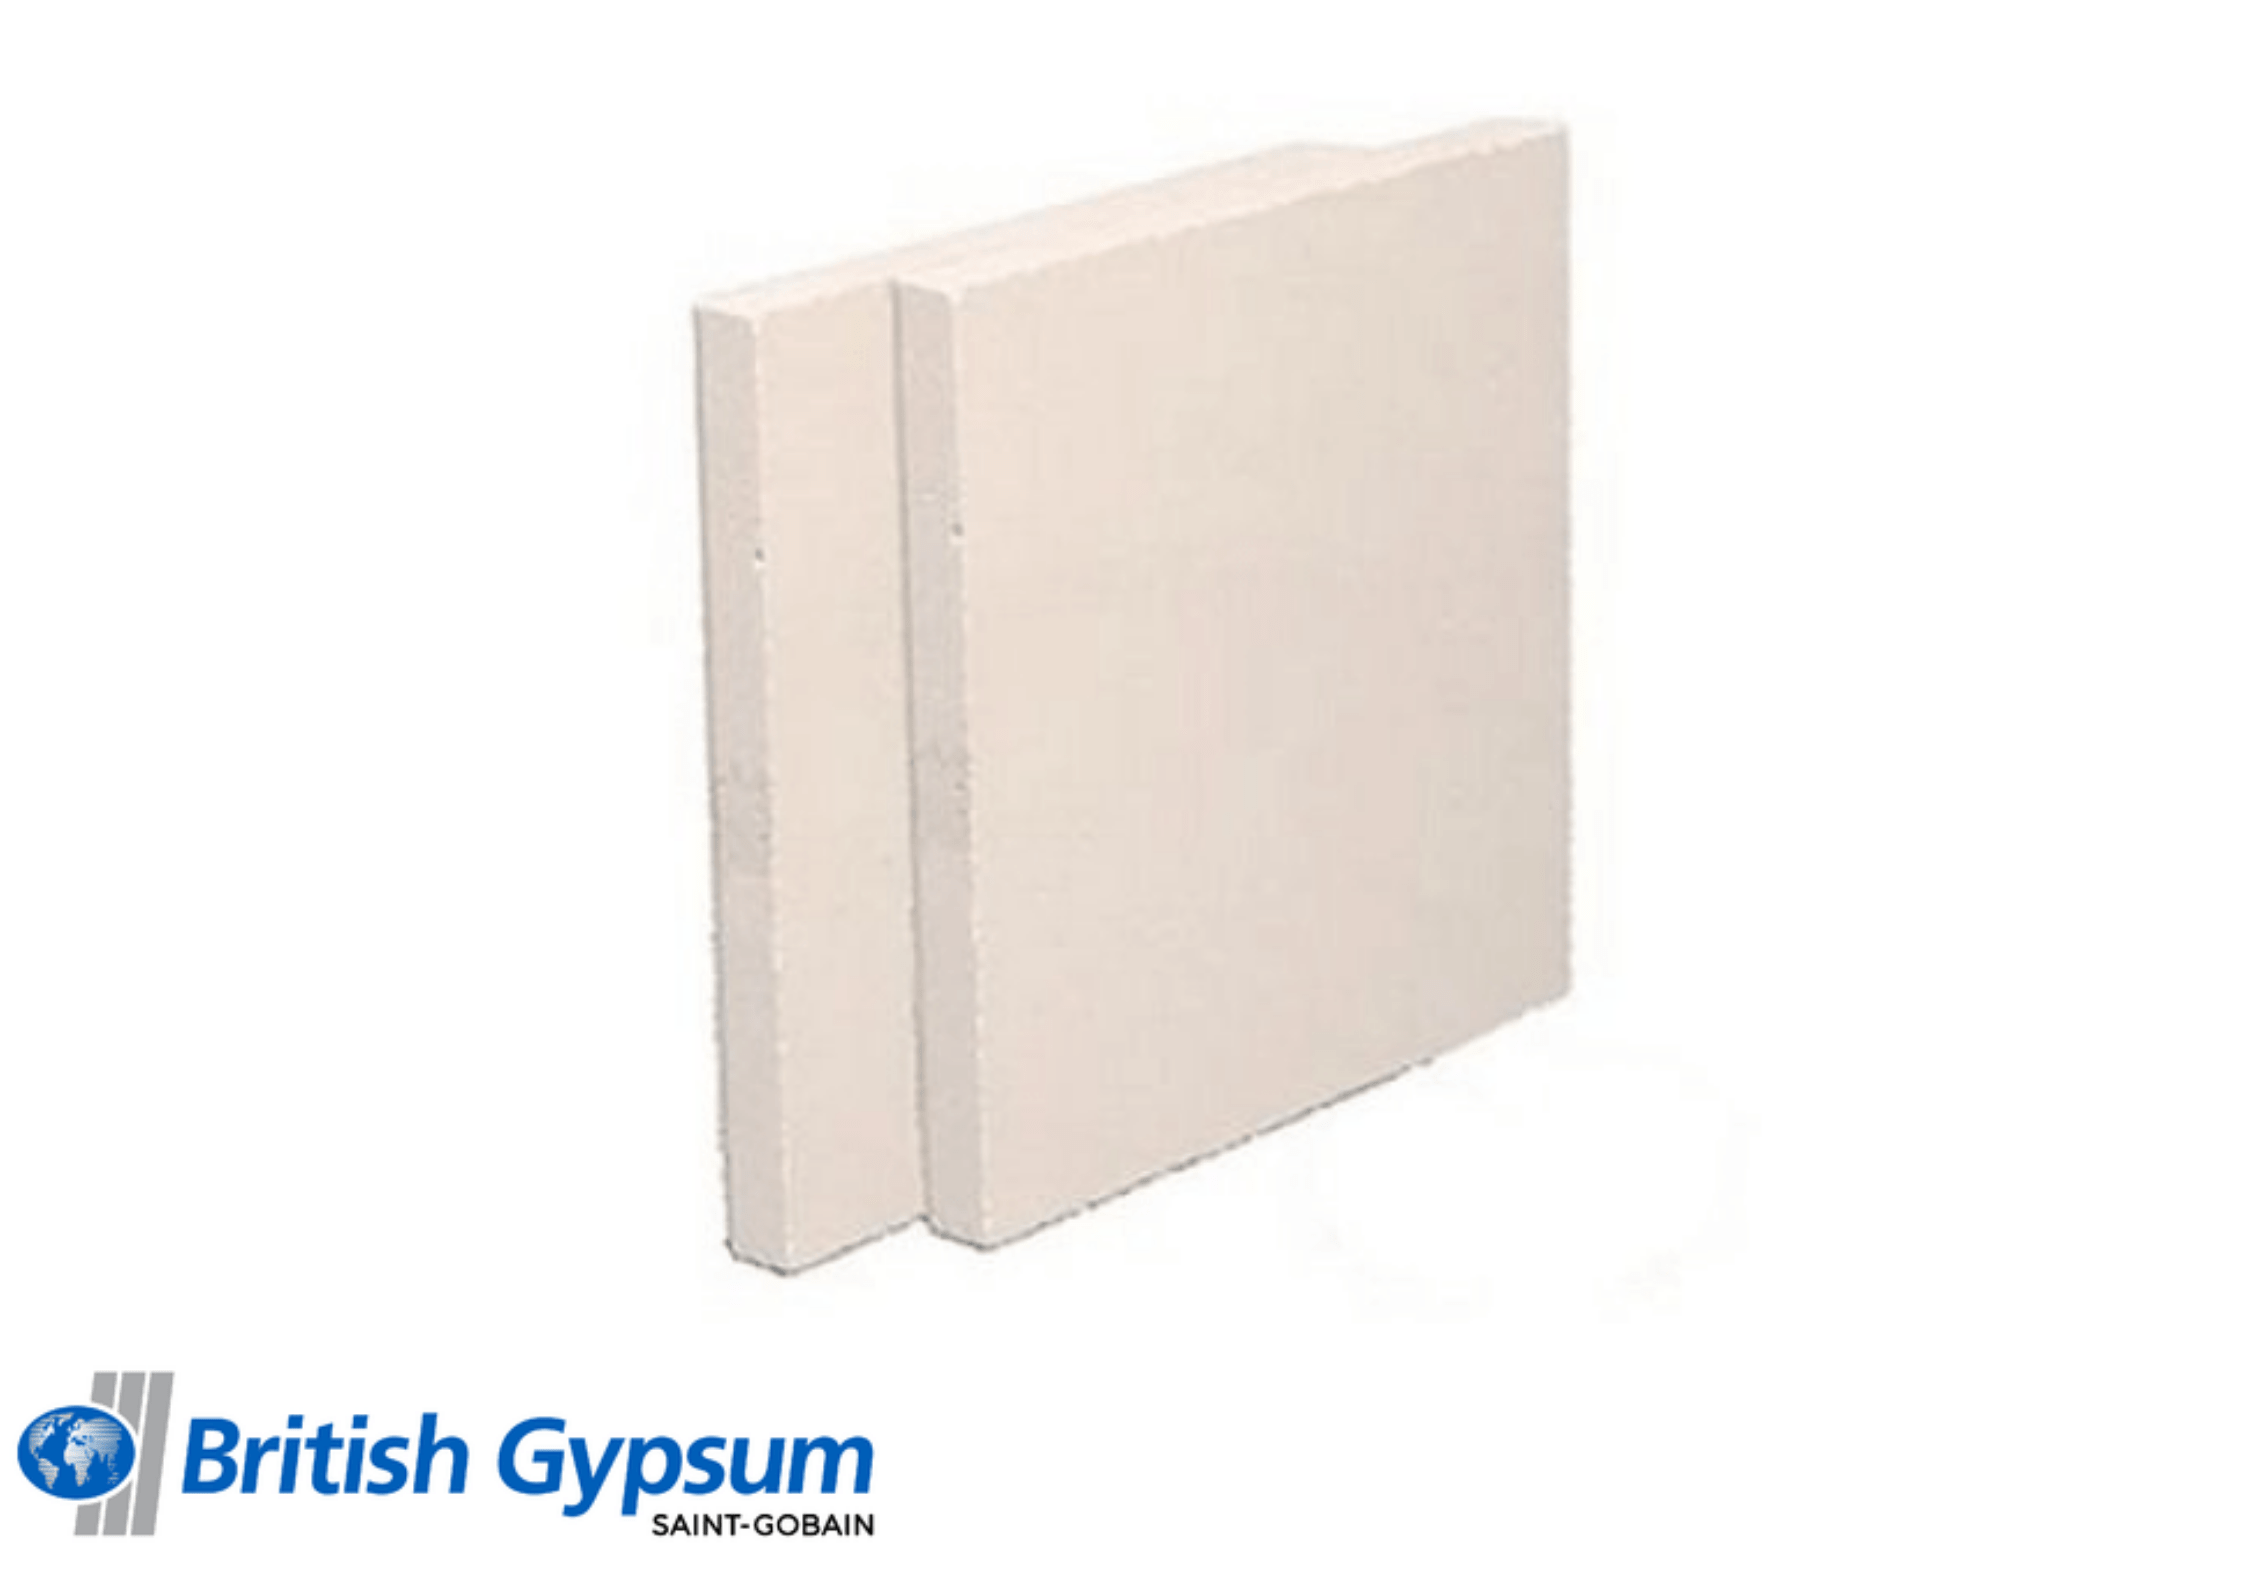 British Gypsum Drywall British Gypsum Glasroc F FireCase 2000 x 1200 x 15mm IUK01119 British Gypsum Glasroc F FireCase 2000 x 1200 x 15mm | Insulationuk.co.uk